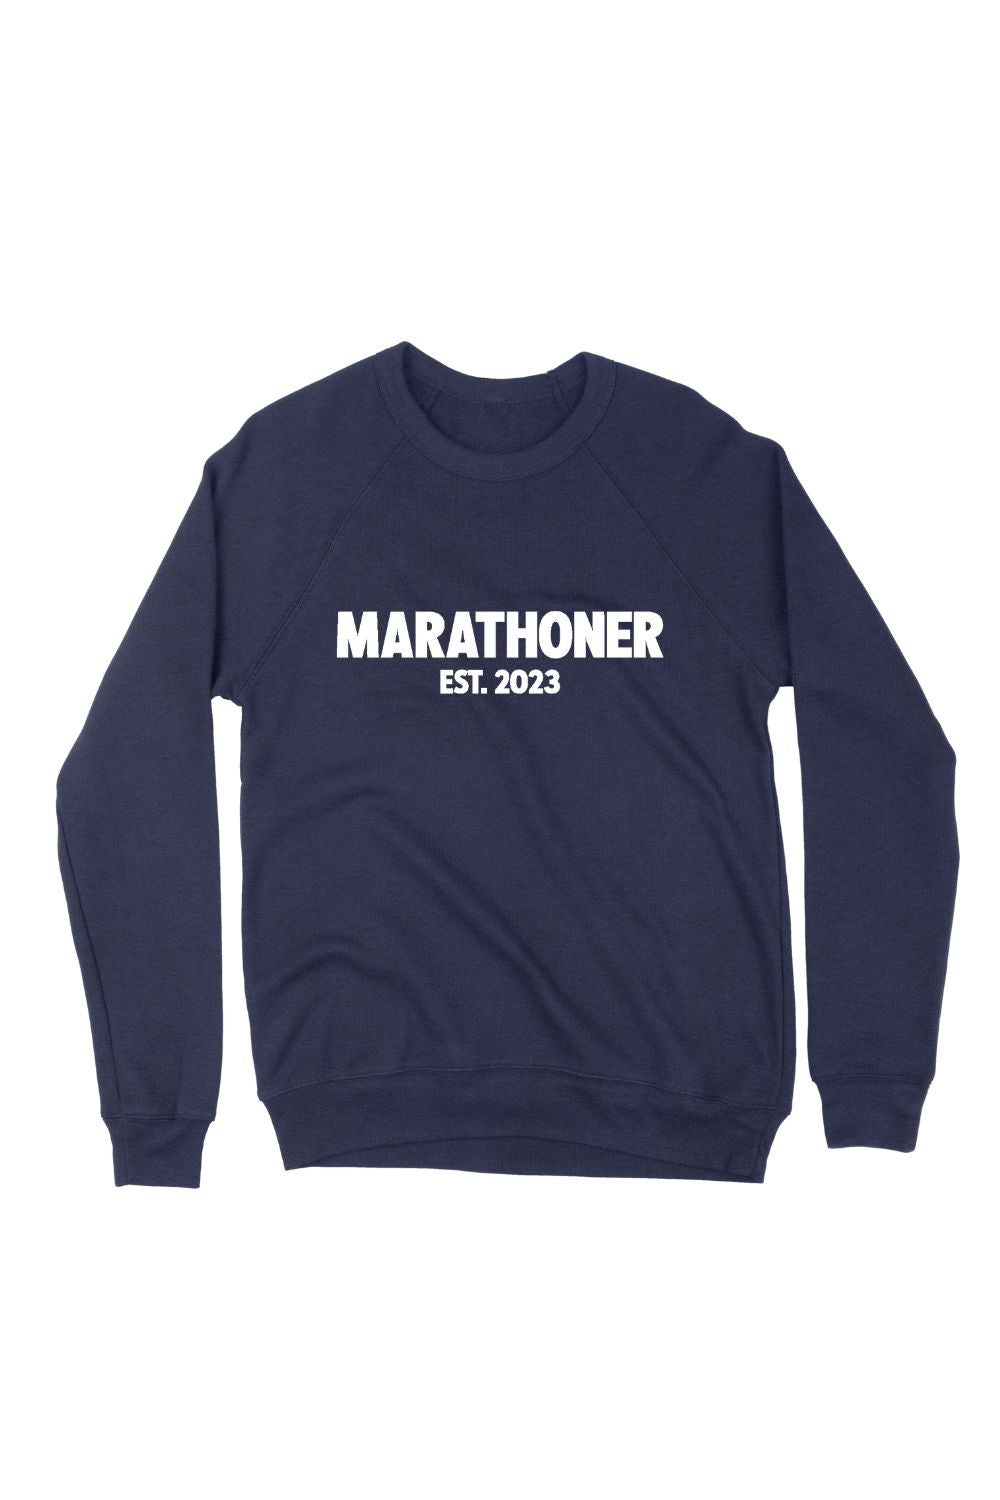 Marathoner EST 2023 Sweatshirt